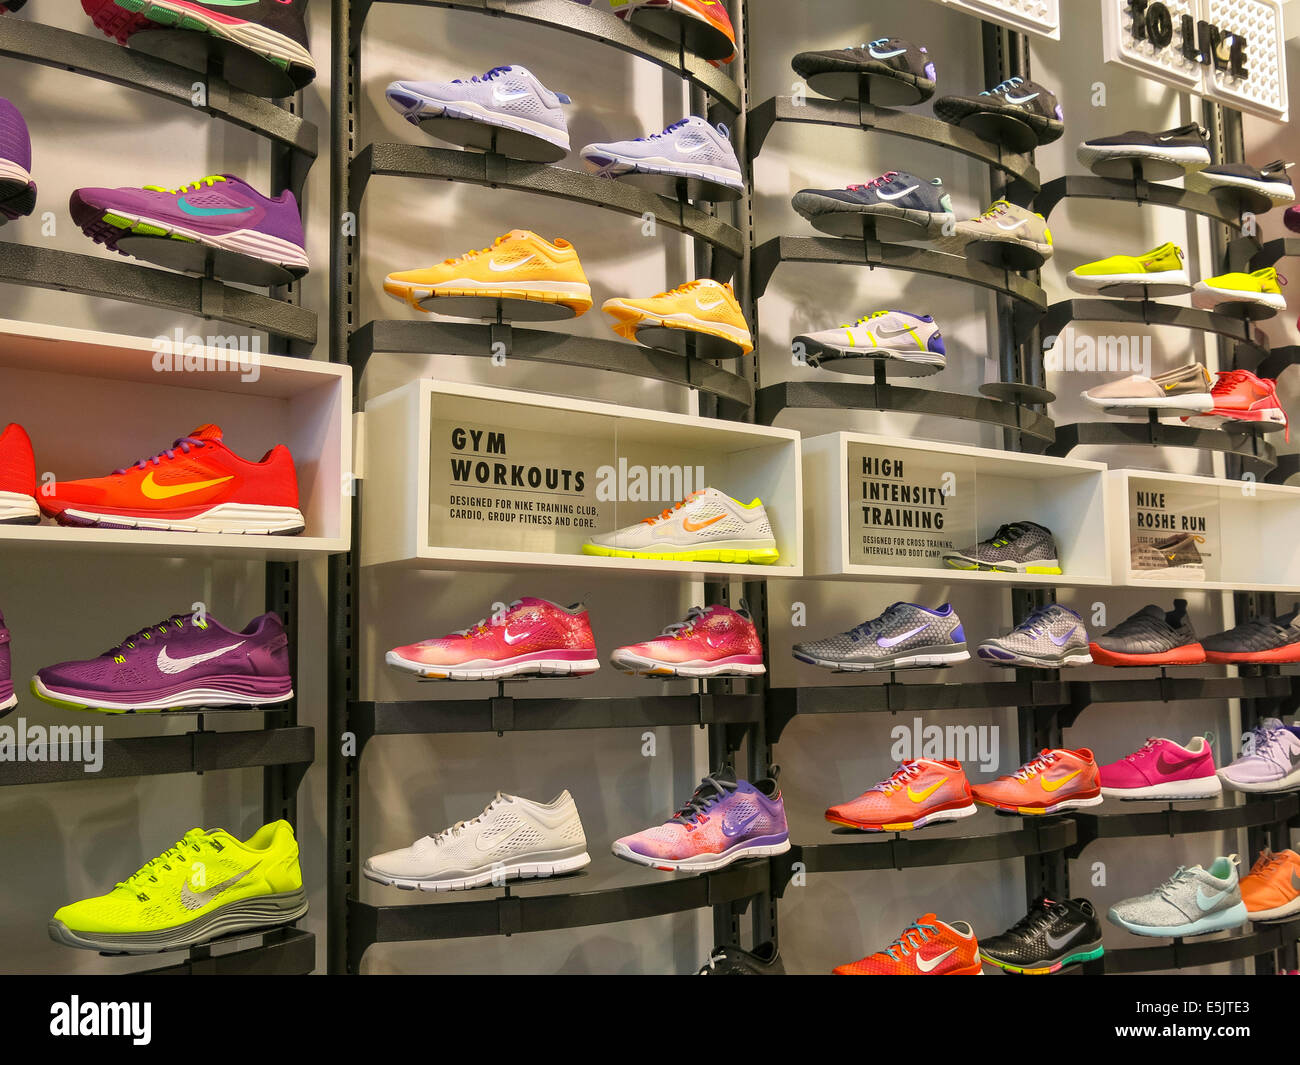 Chaussure Nike Afficher, NYC Photo Stock - Alamy